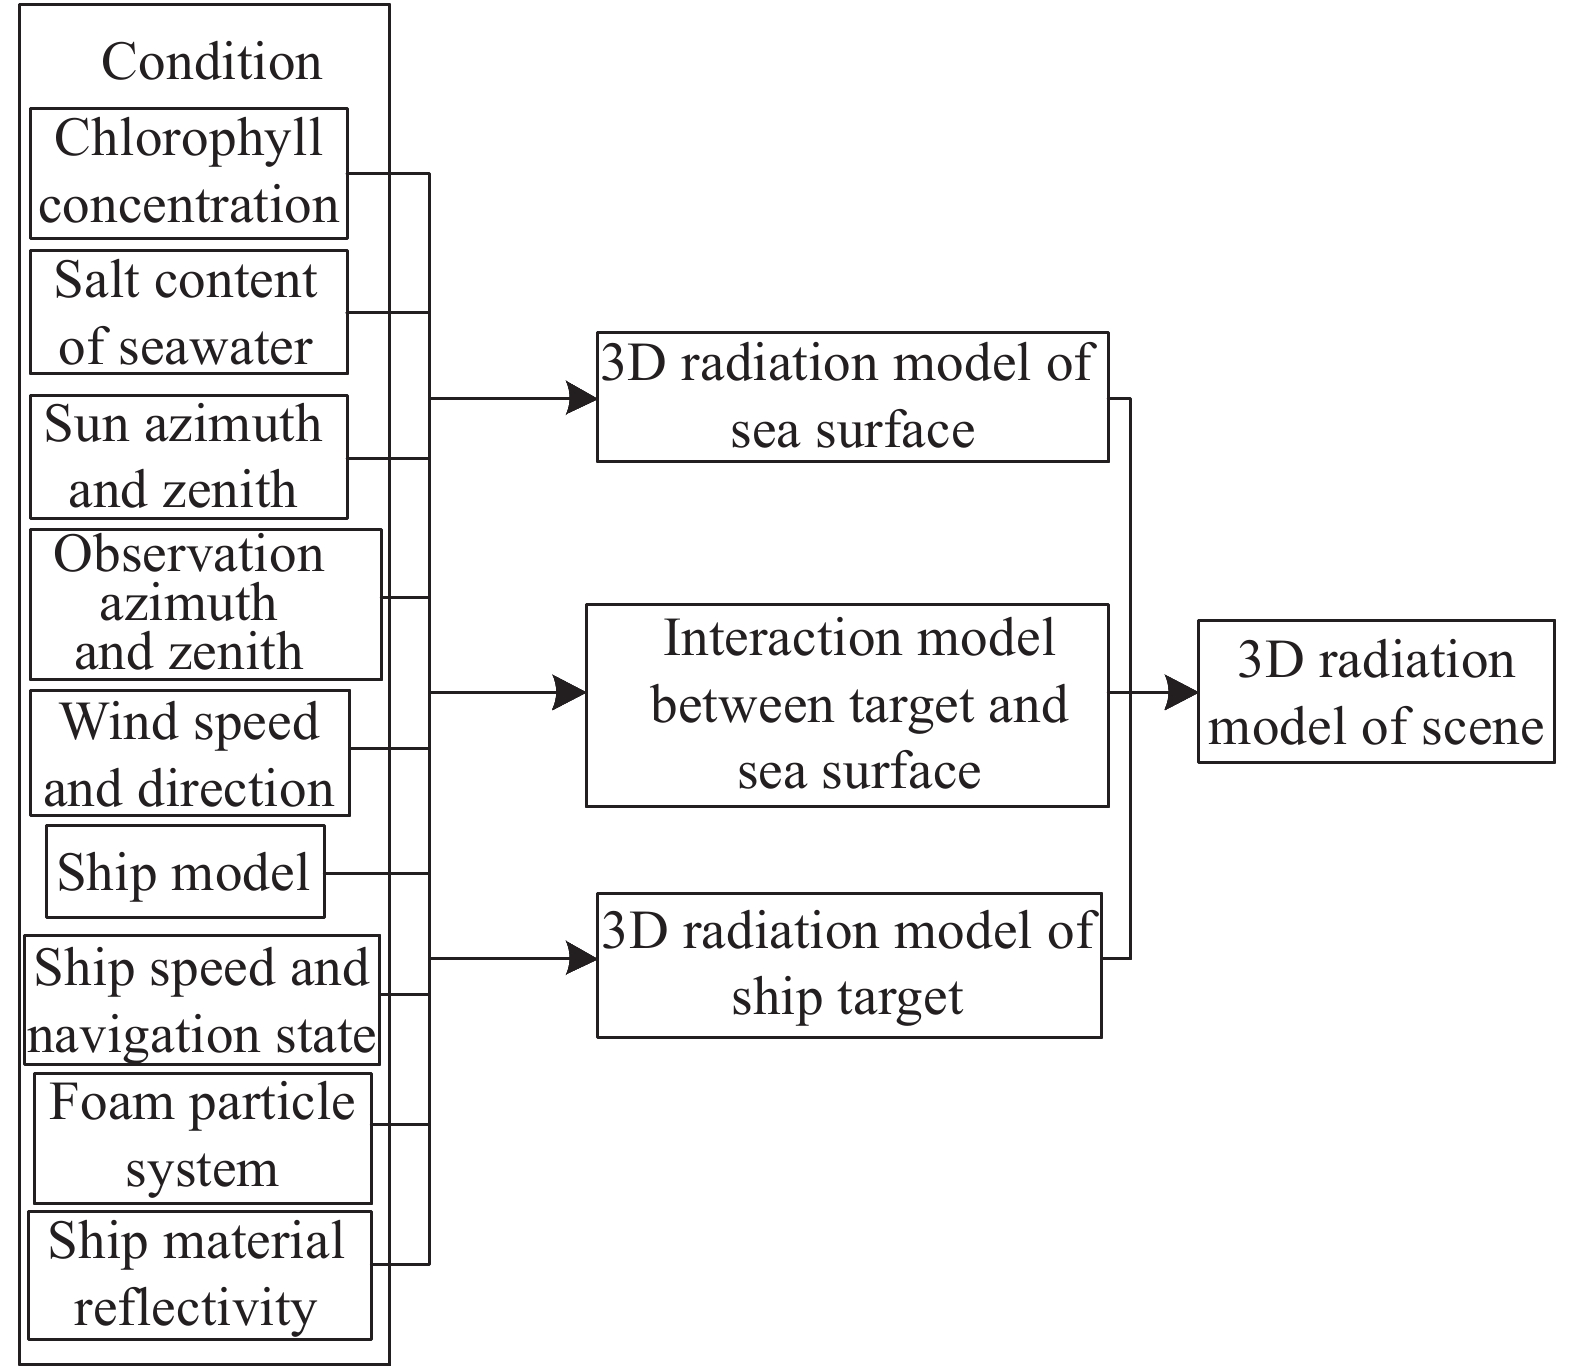 Construction of 3D radiation model of sea scene